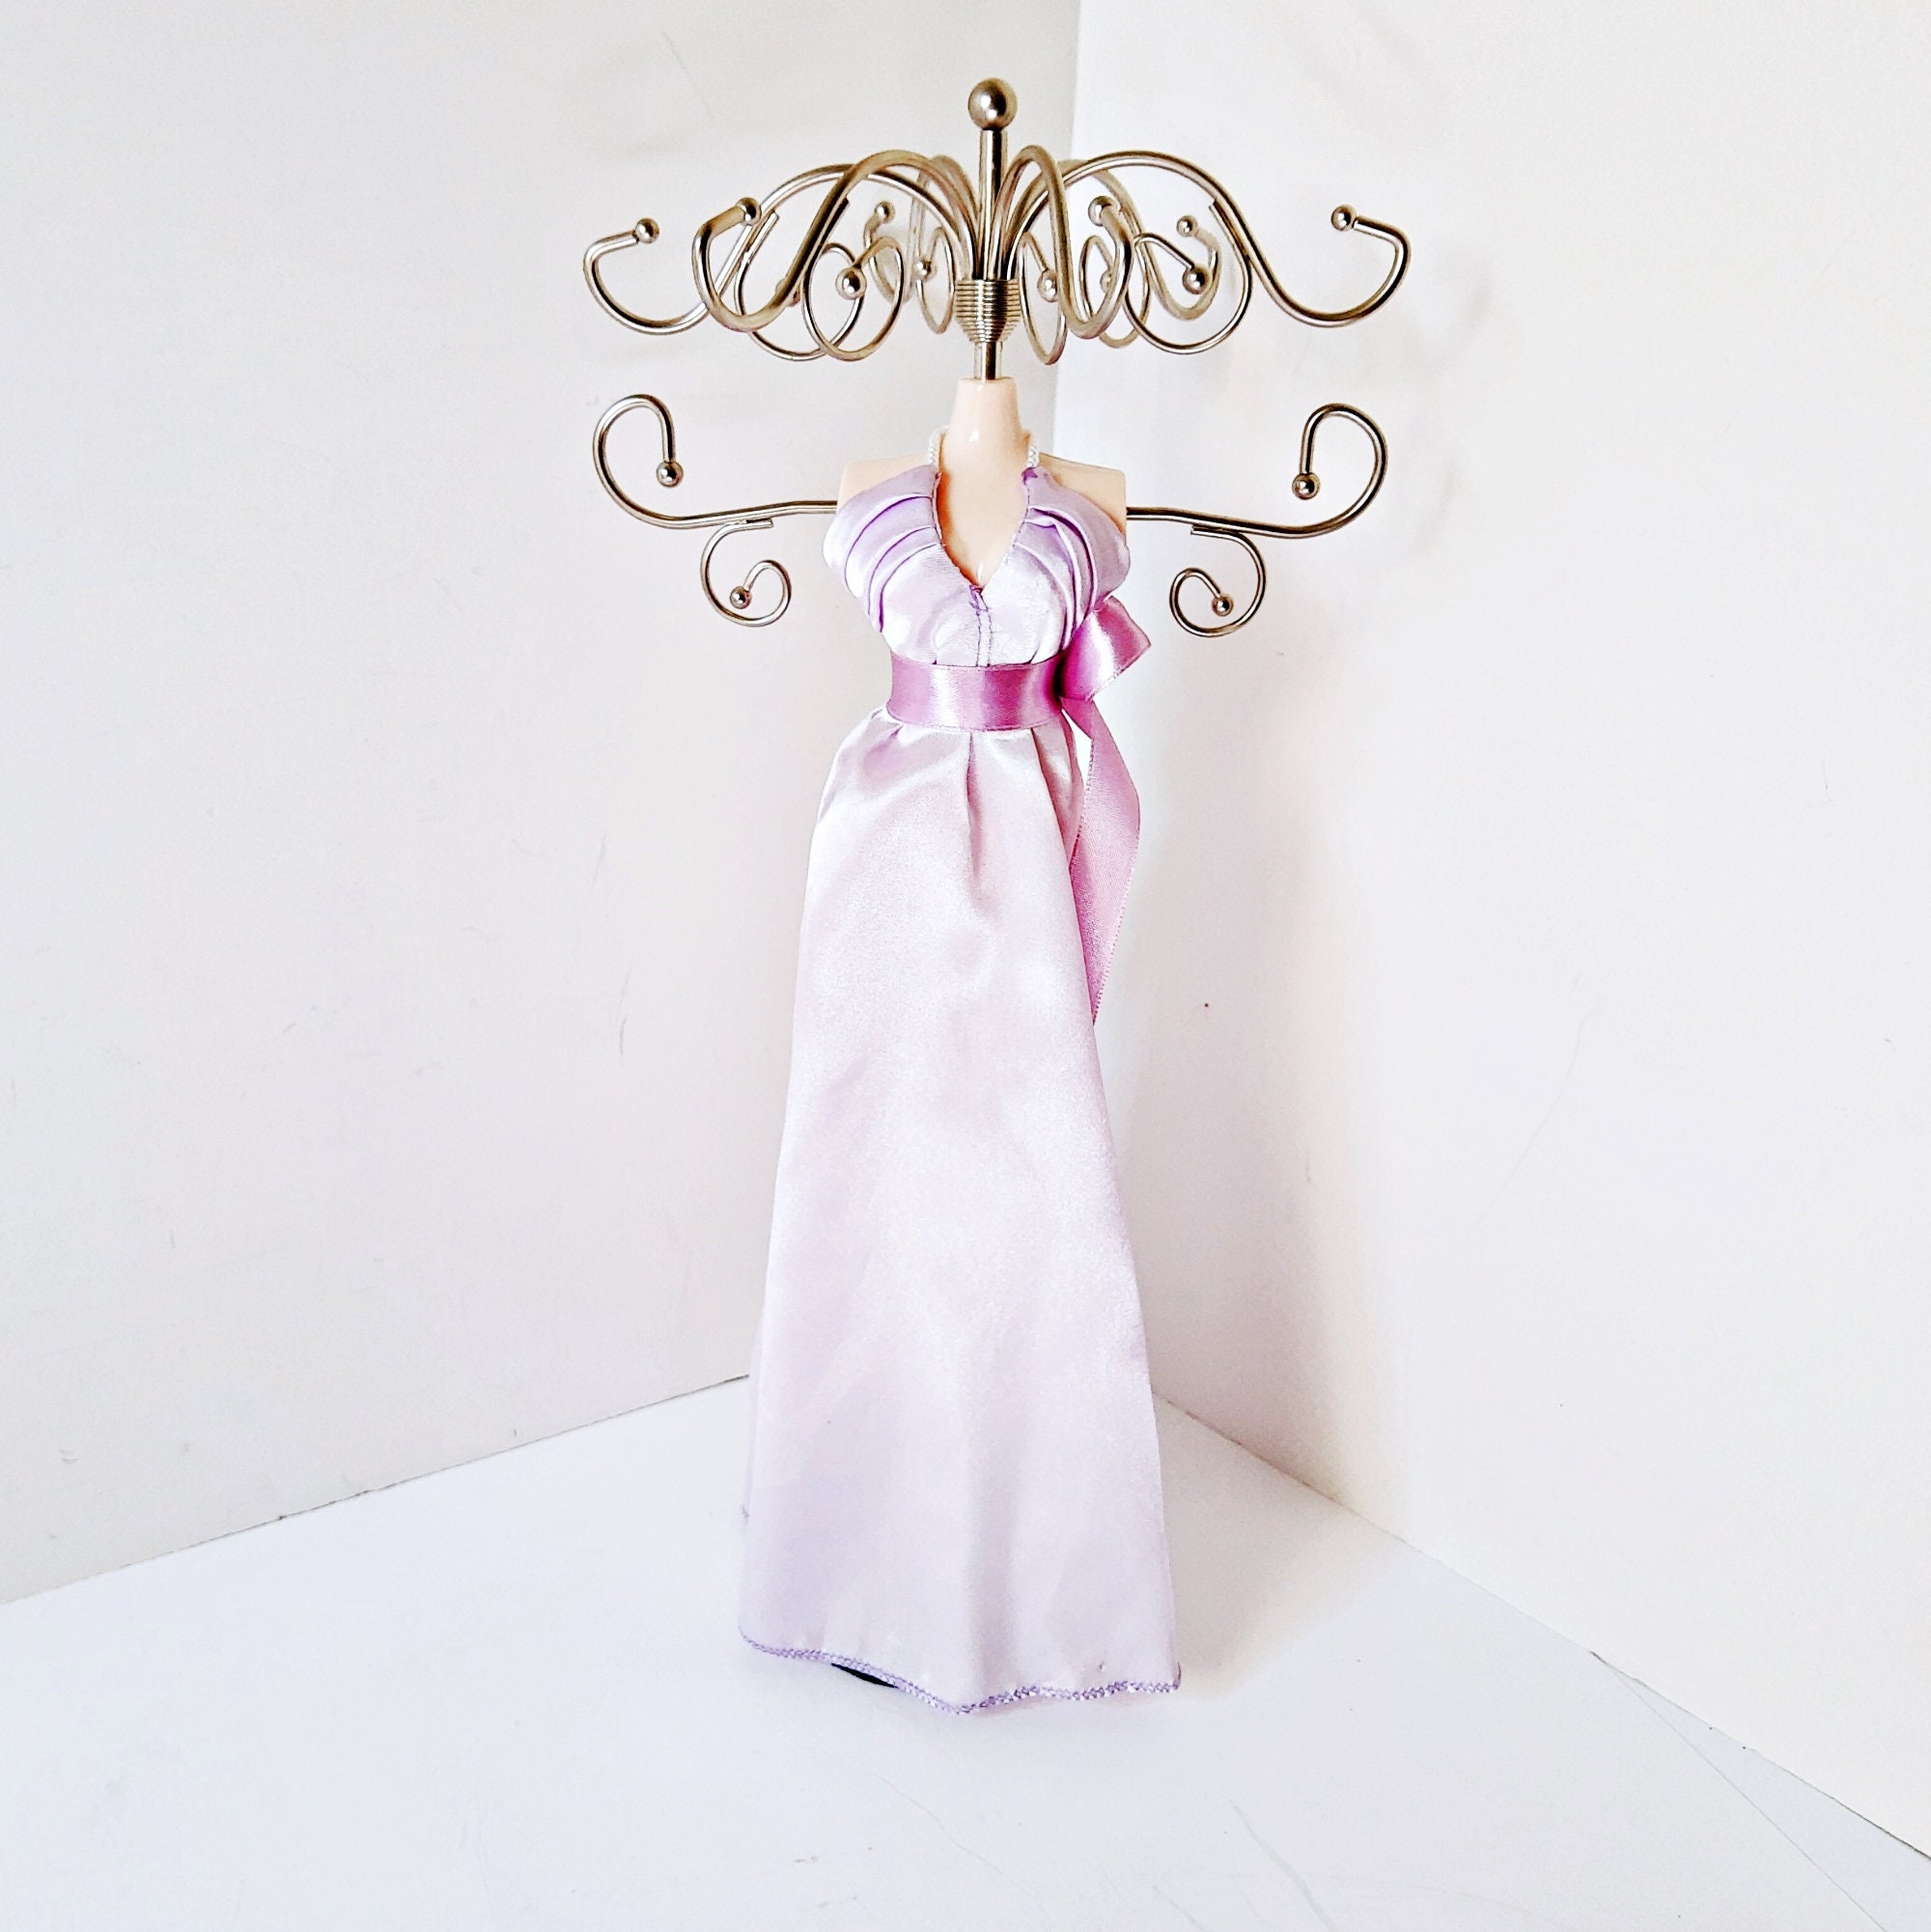 4 Piece Vintage Lace Linen Dress Mannequin Jewelry Display Set - Holder &  Stand - Zen Merchandiser